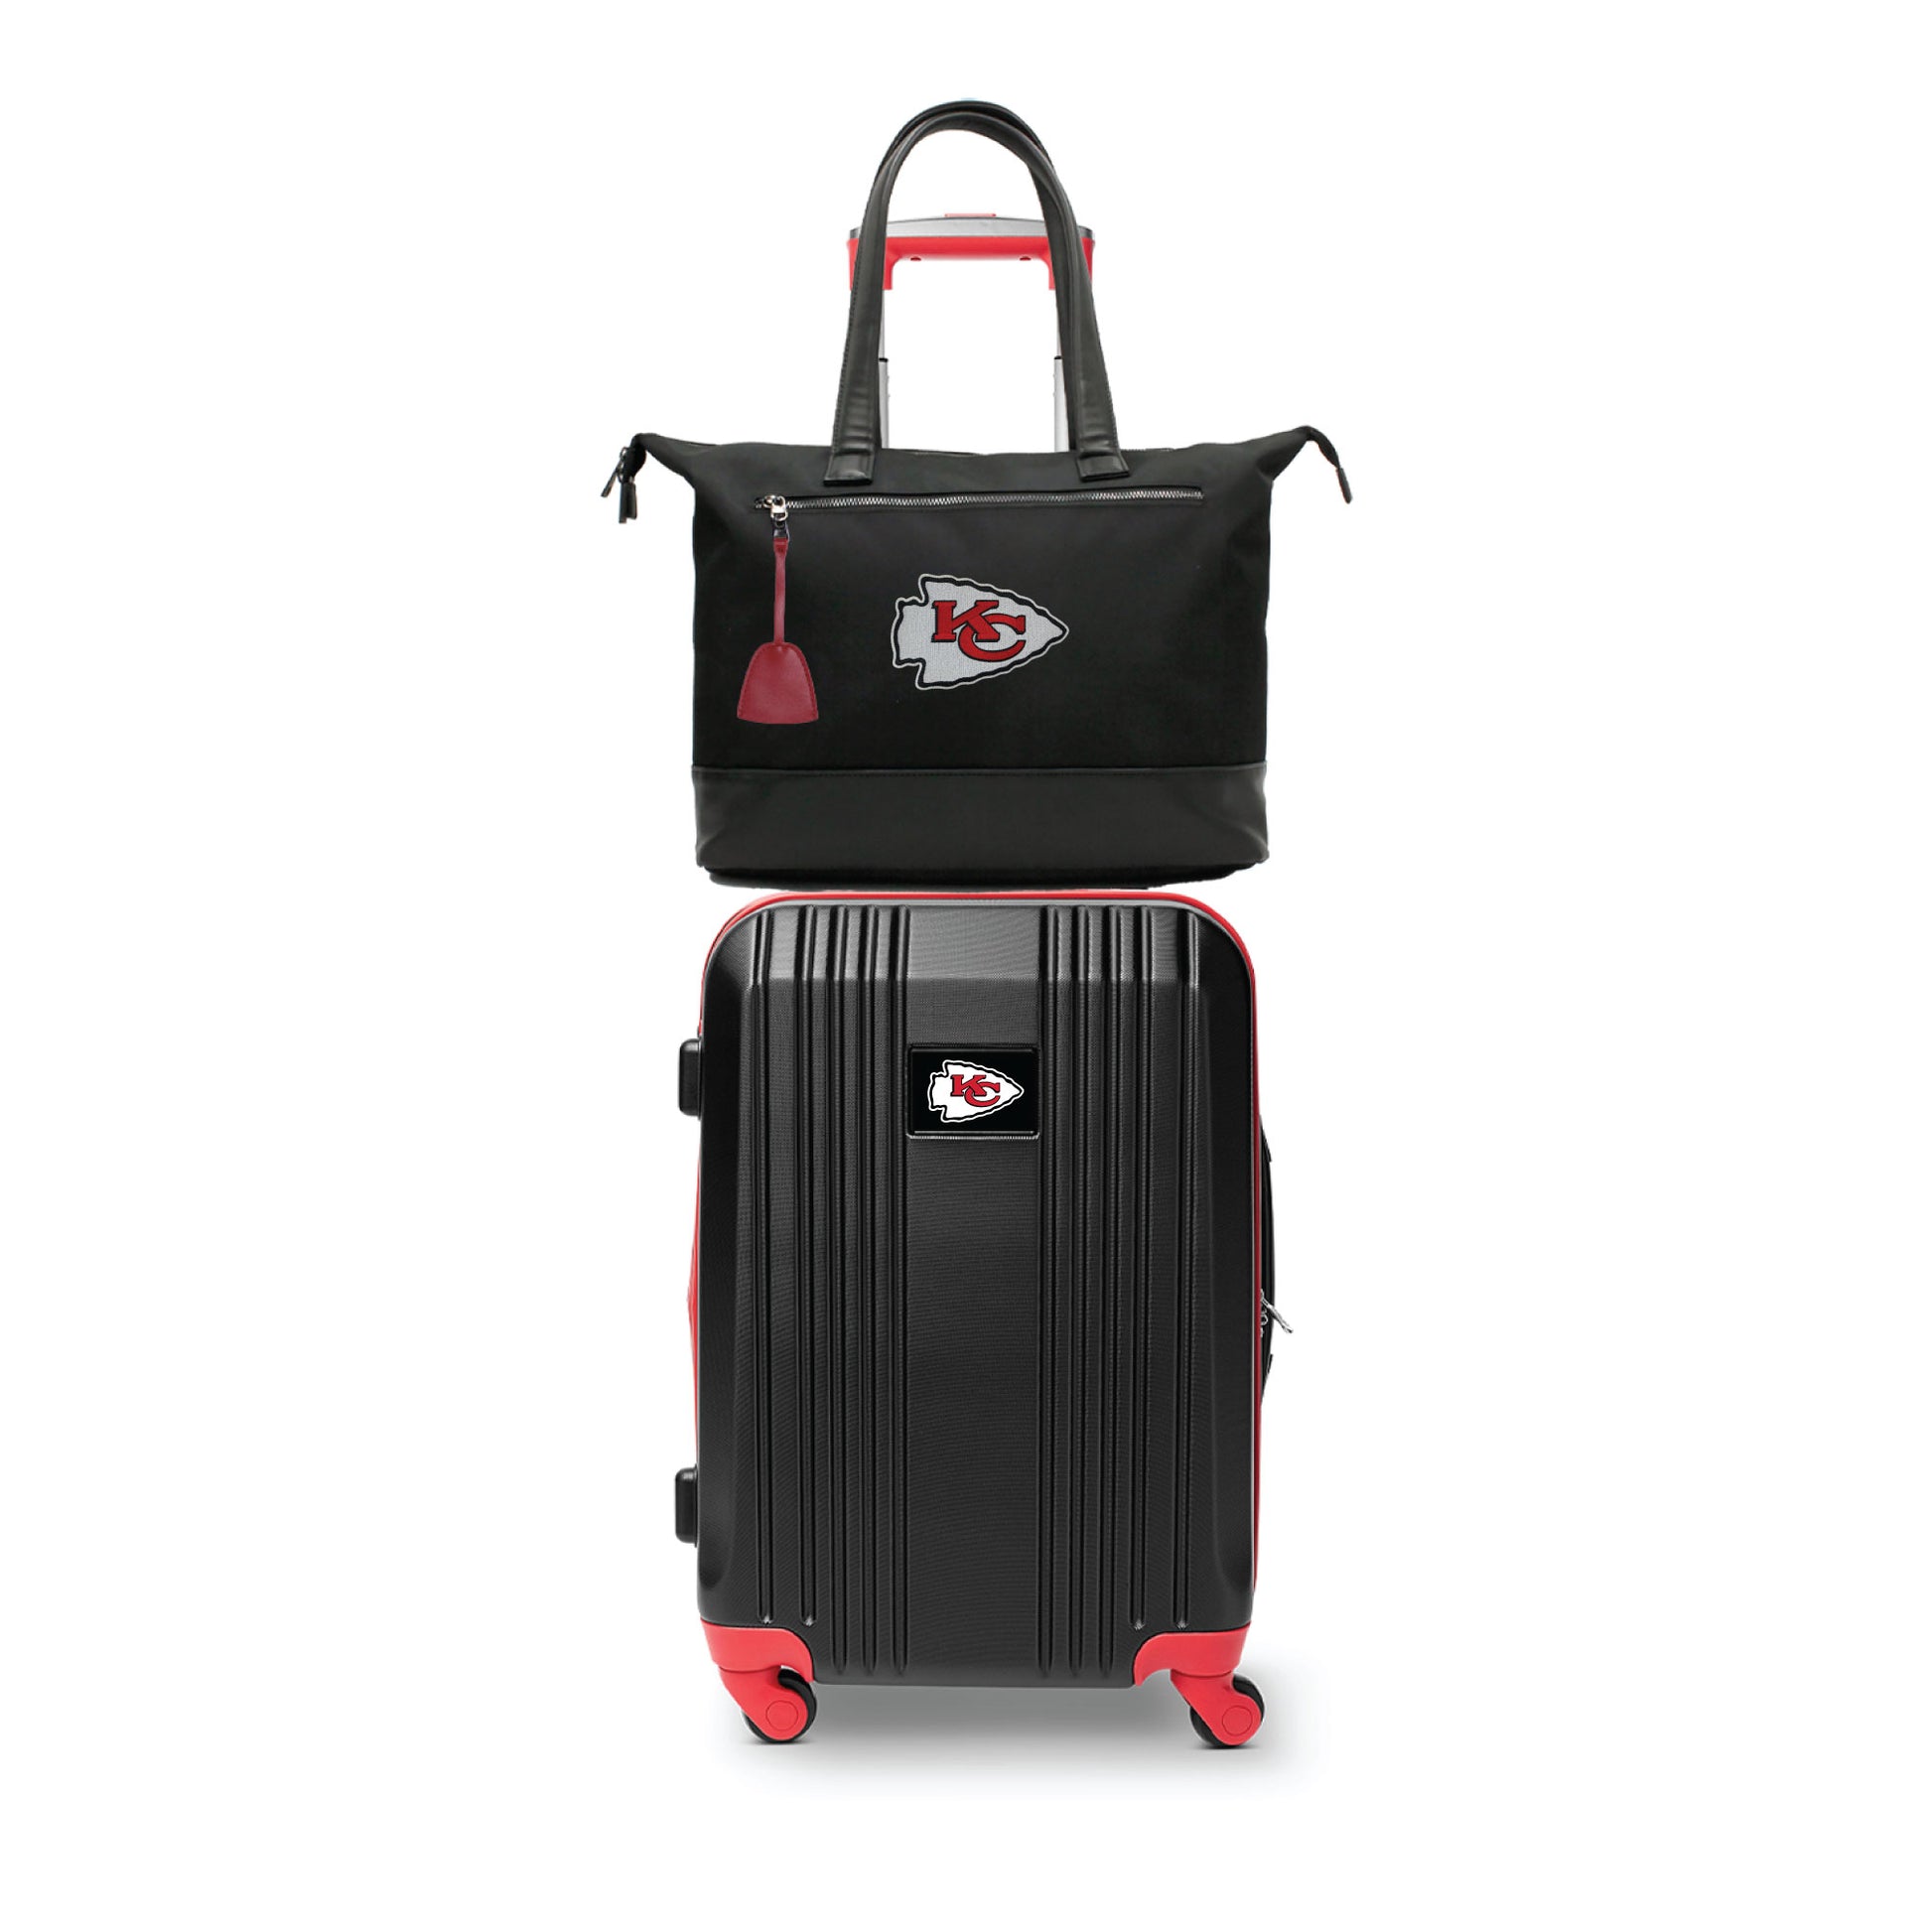 Kansas City Chiefs Premium Laptop Tote Bag and Luggage Set